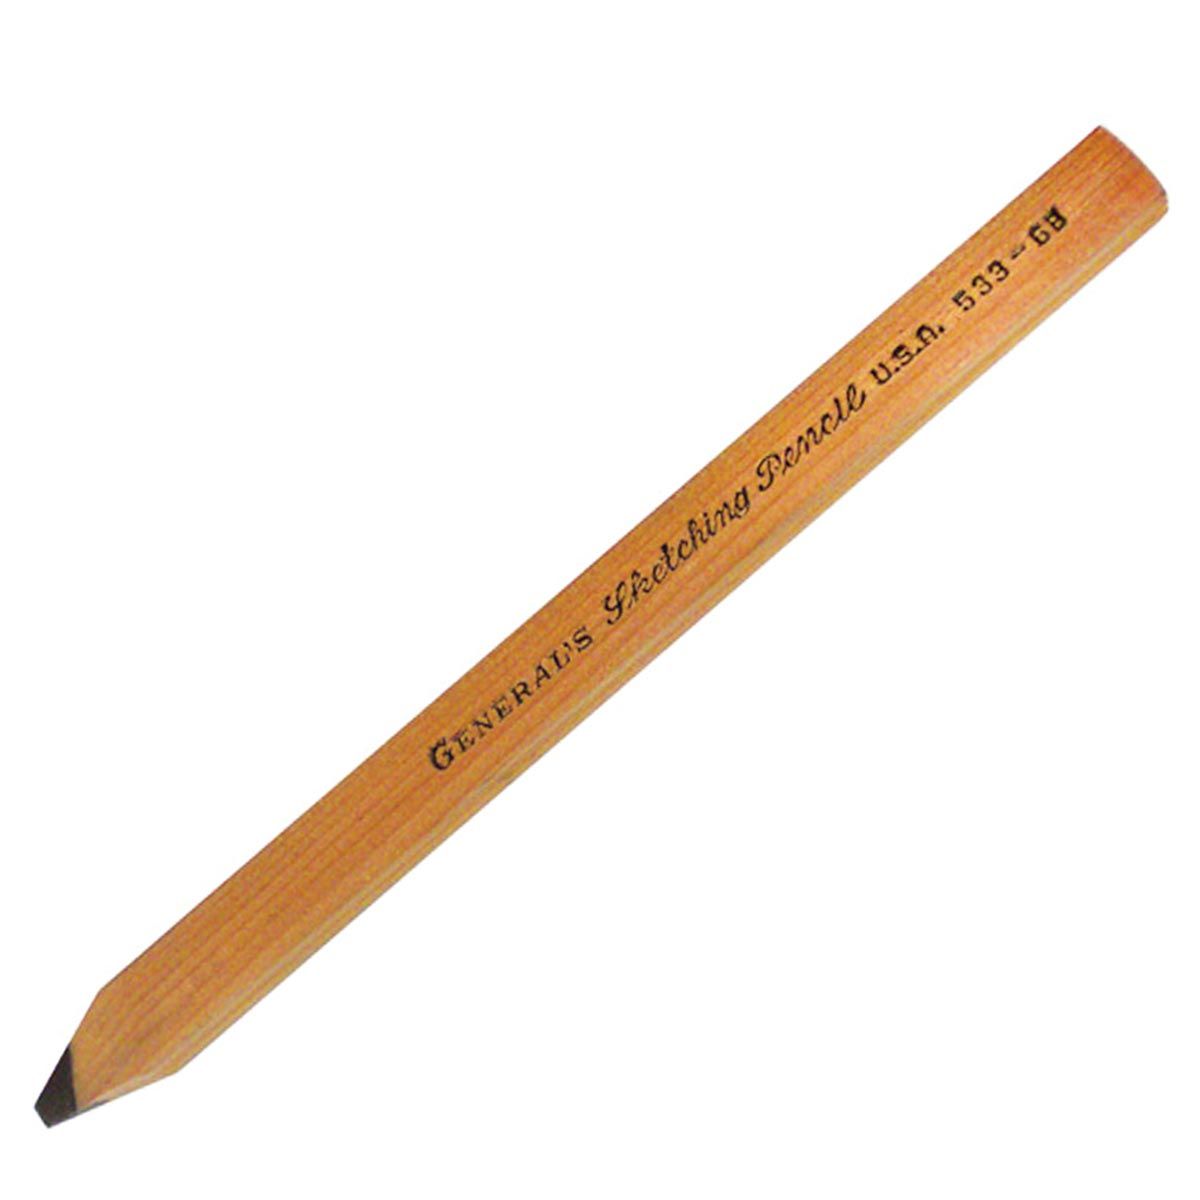 General's Sketching Flat Pencil - 6B